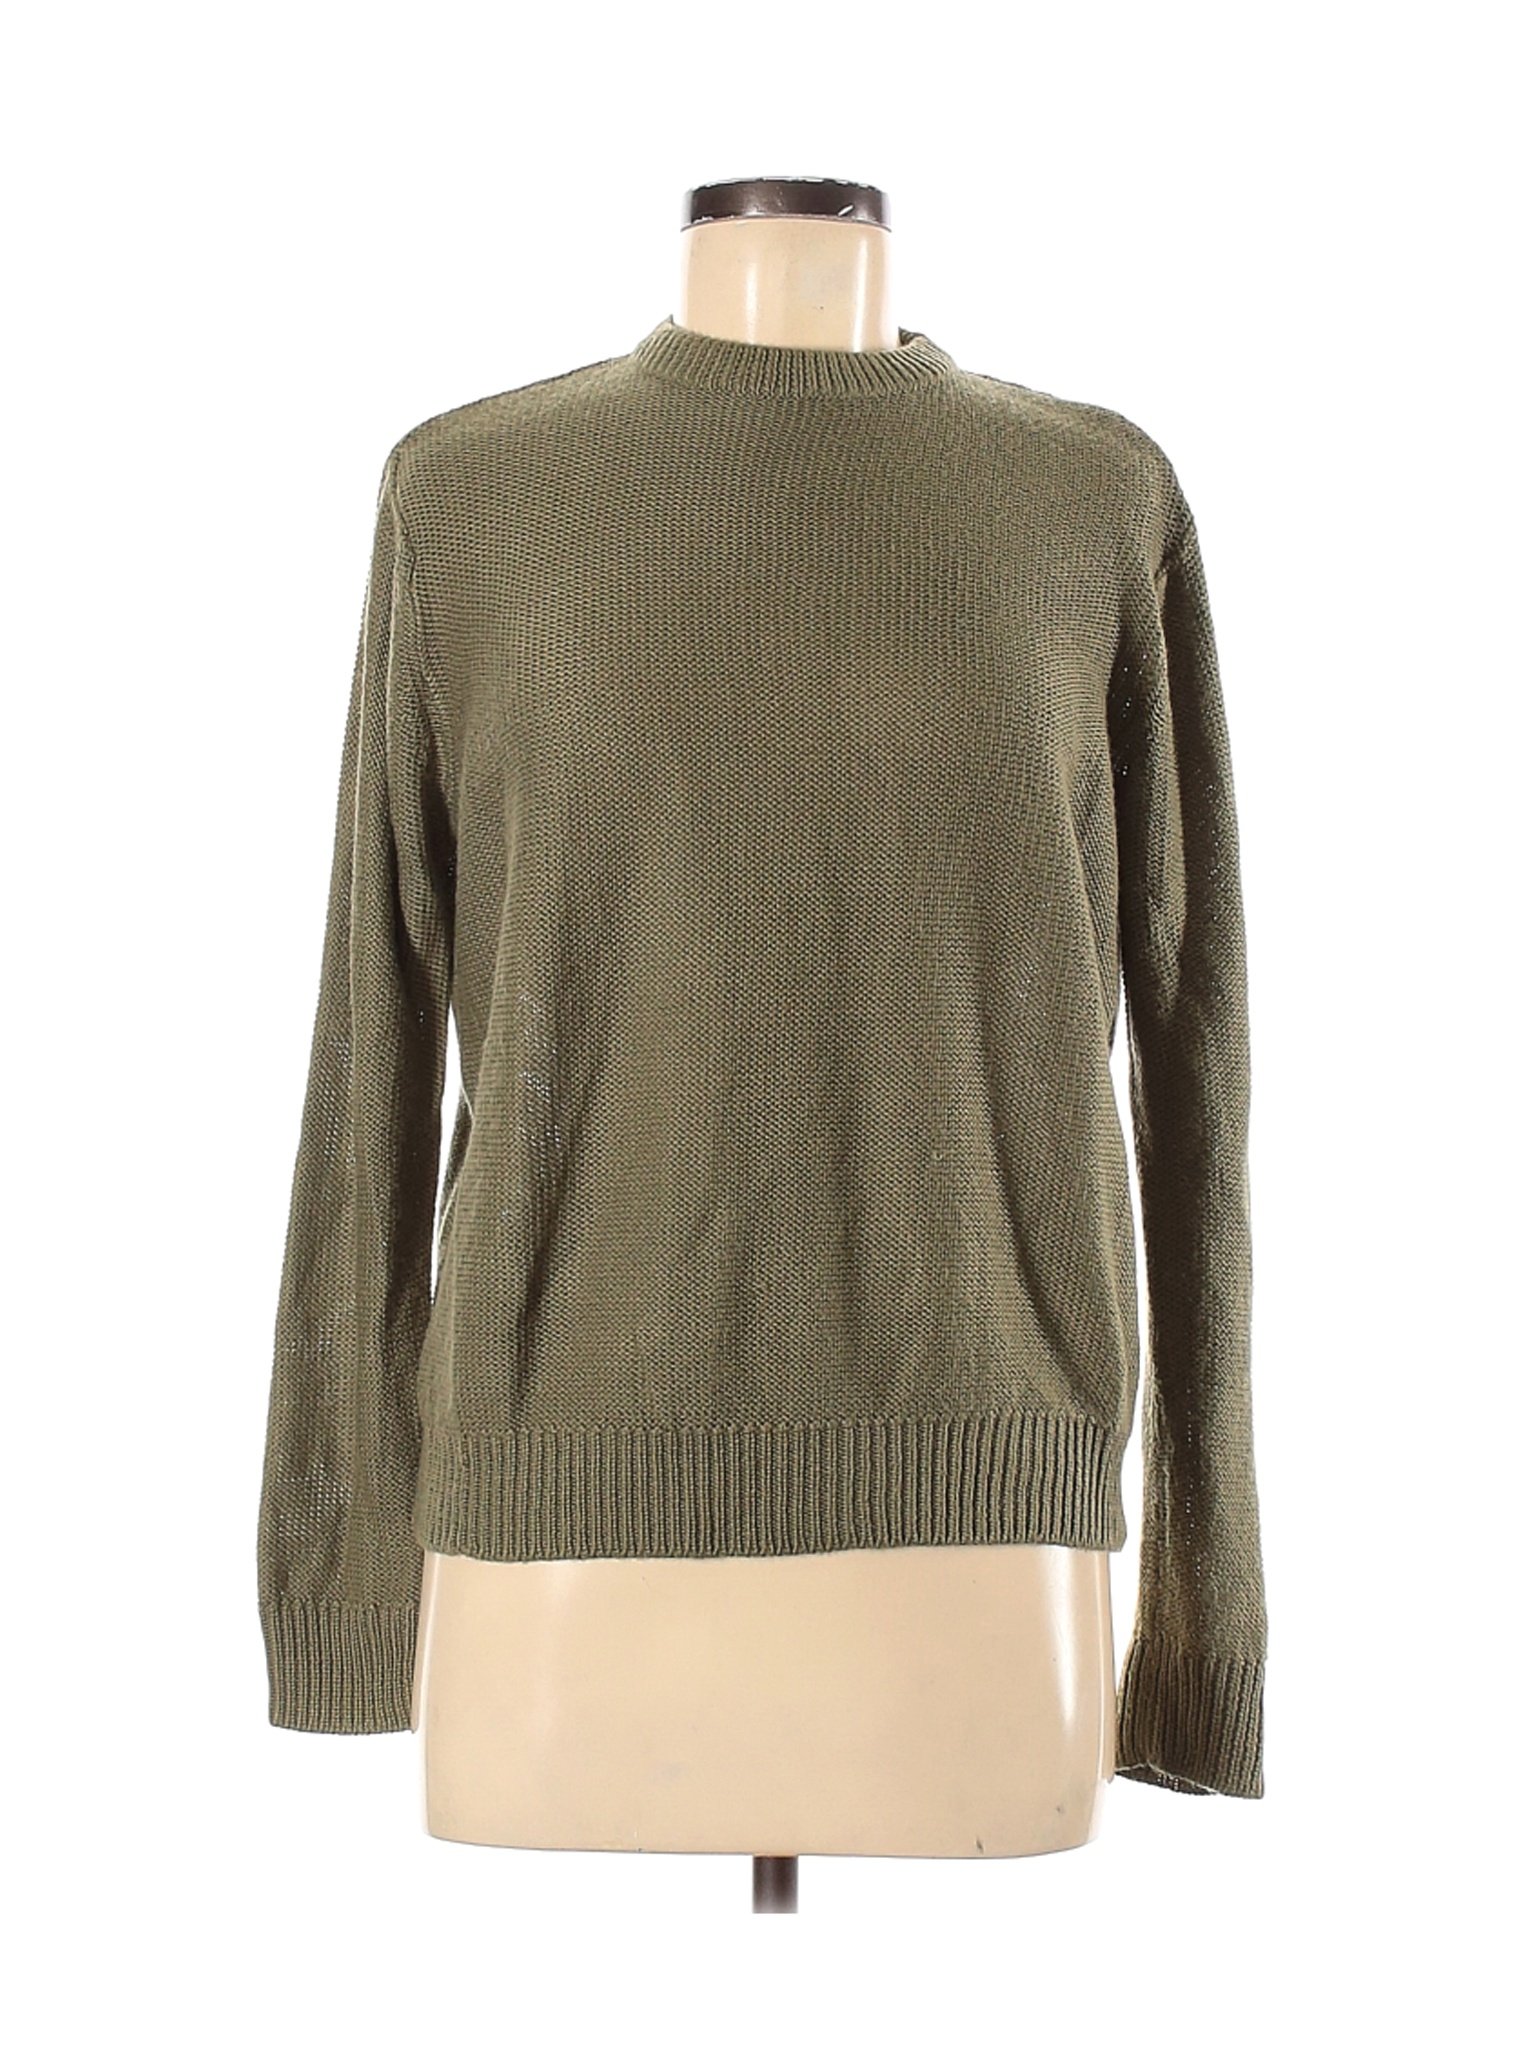 Zara Women Green Pullover Sweater S | eBay